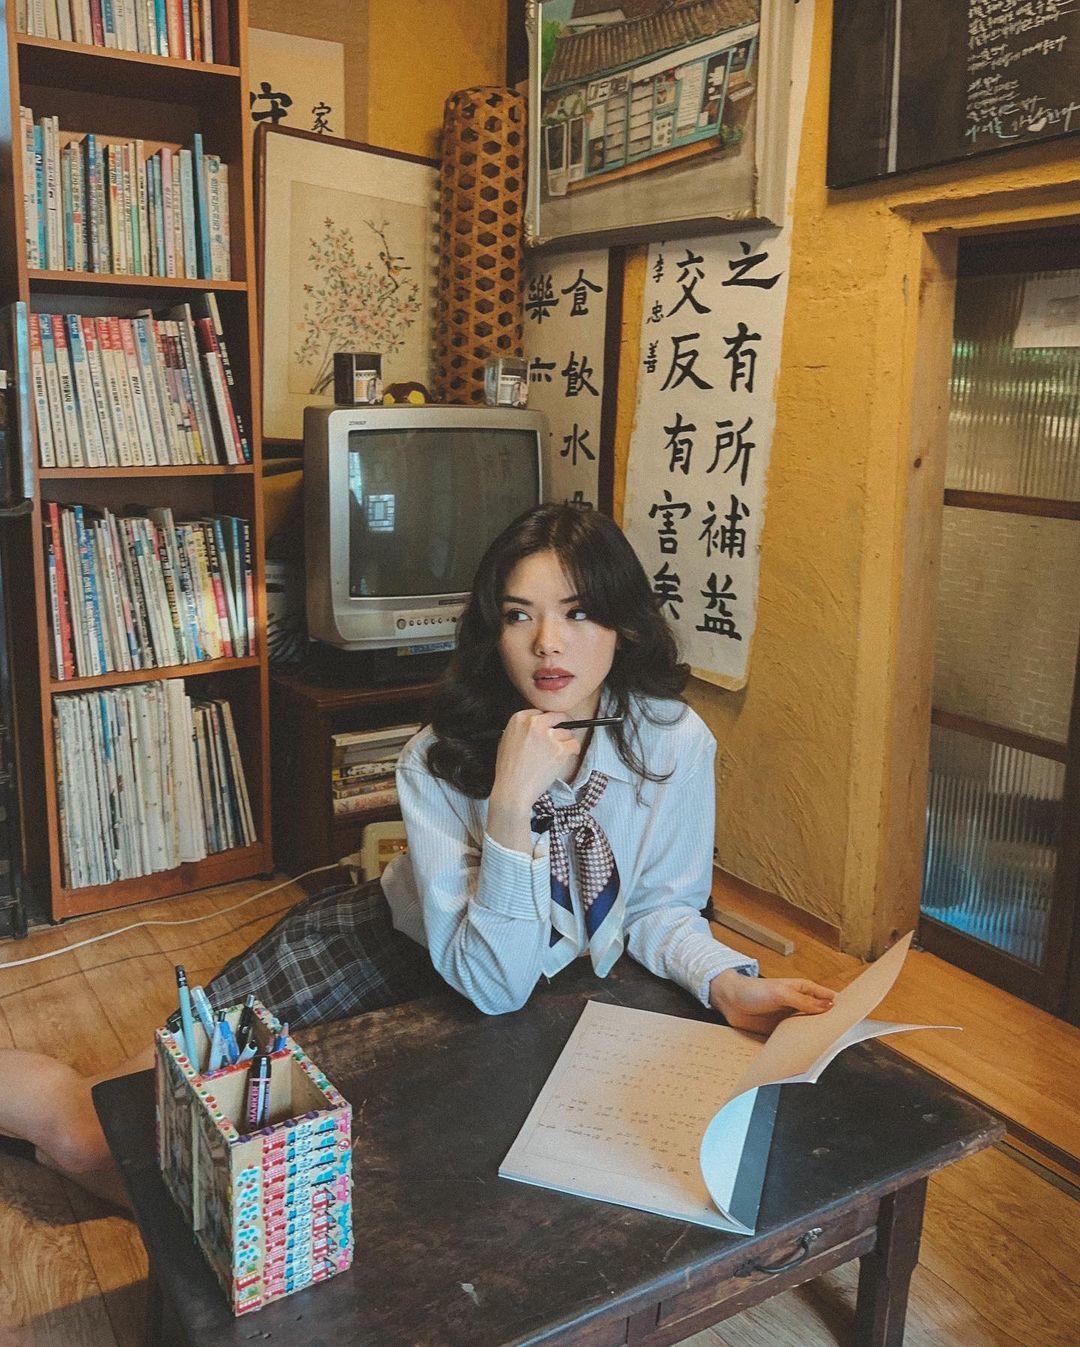 class="content__text"
 Making myself at home ♡

Taken by @katiecung at Dae-o Bookstore. 
.
.
.
.
.

 #filmphotography #filmphoto #vintagestyle #vintageaesthetic #bookstore #parisianchic #parisianvibe #seoul #seoulkorea #korea #parisianstyle #seoulcafe 
 